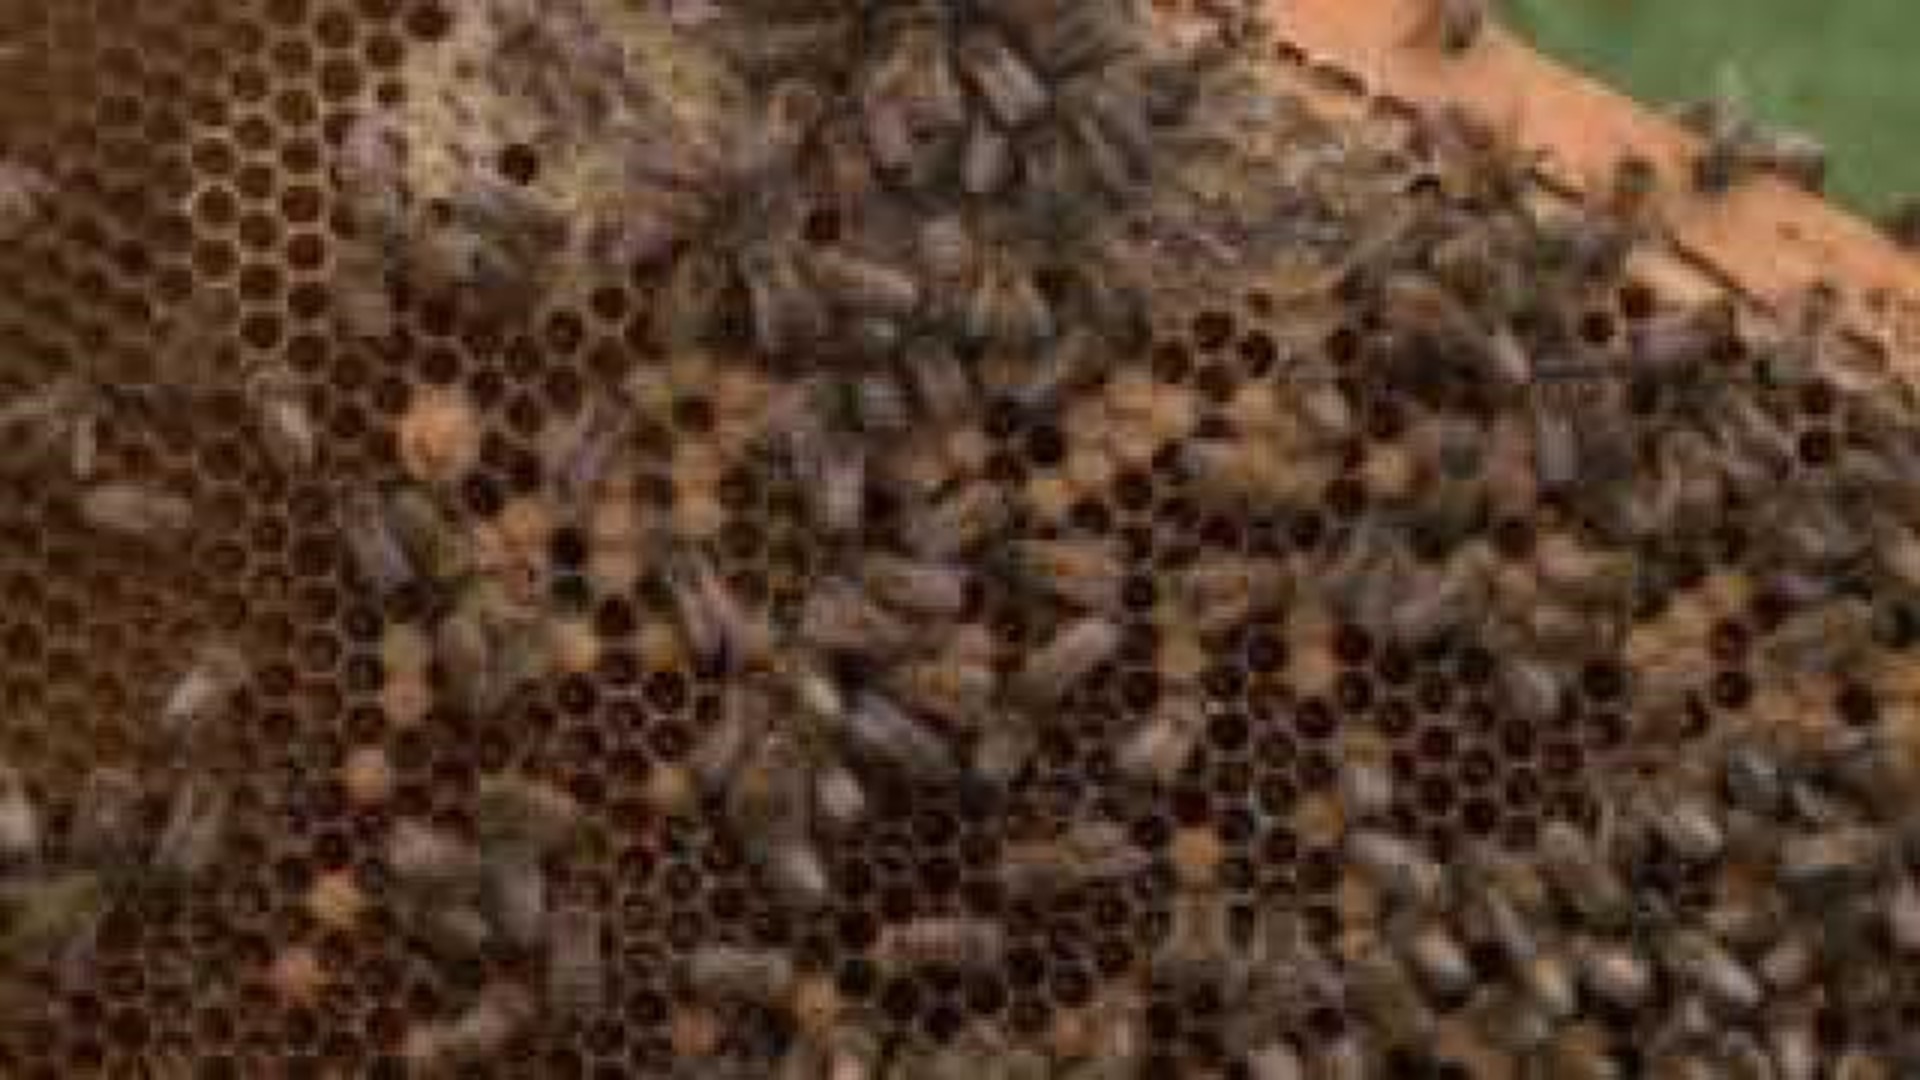 Honey bee shortage hits beekeepers